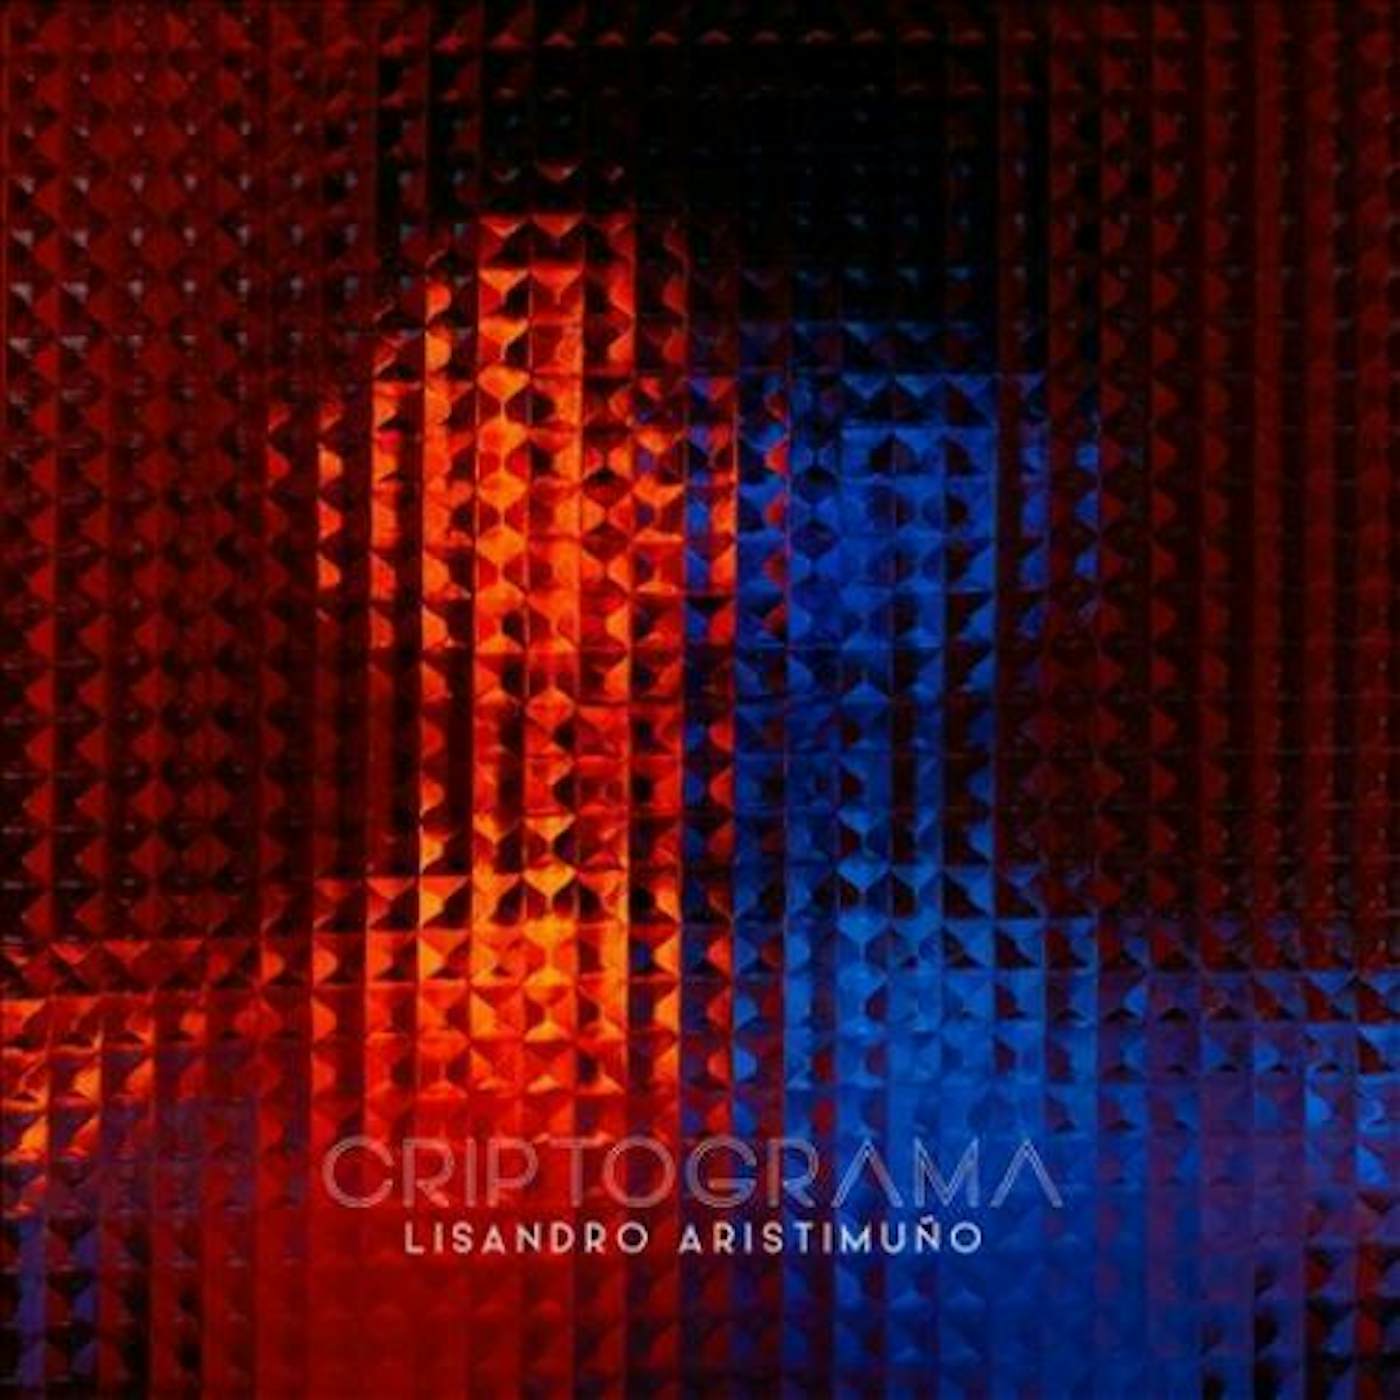 Lisandro Aristimuño Criptograma Vinyl Record